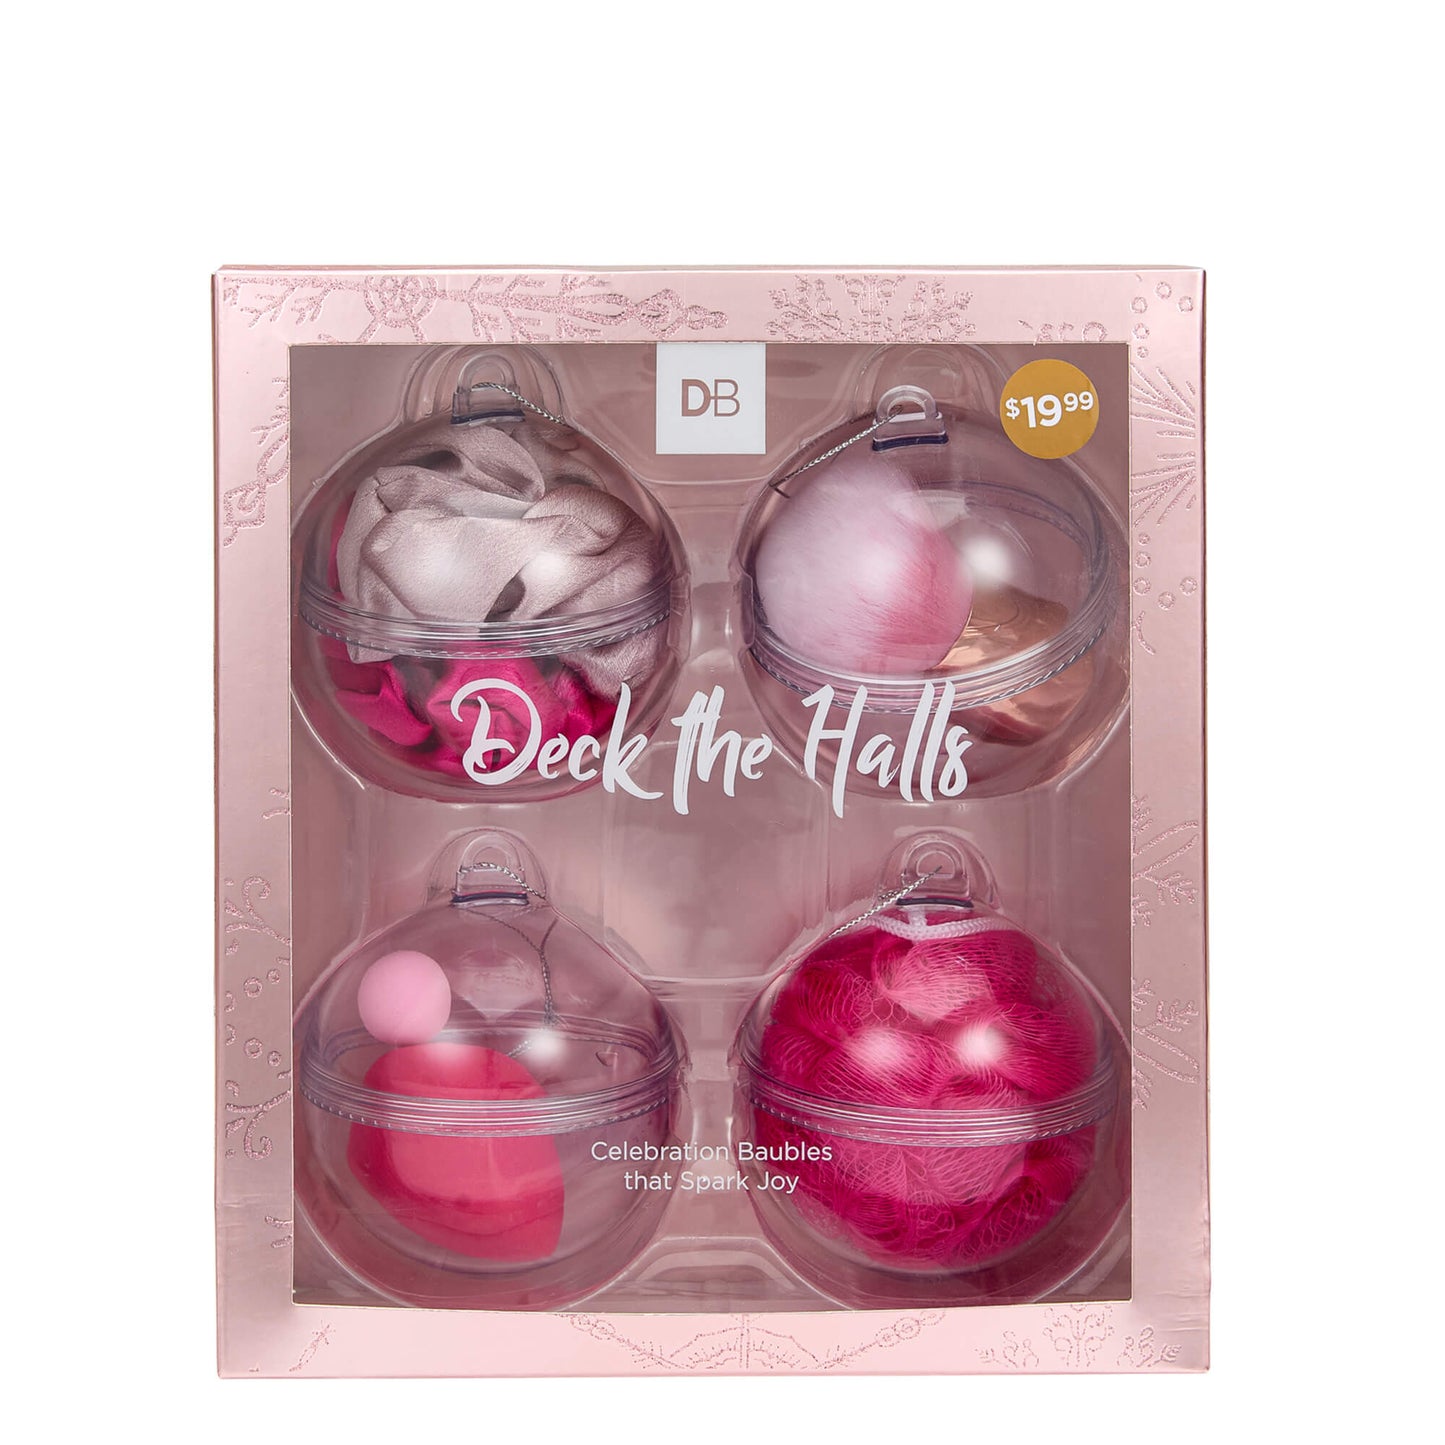 Deck The Halls Celebration Baubles | Boxed | DB Cosmetics